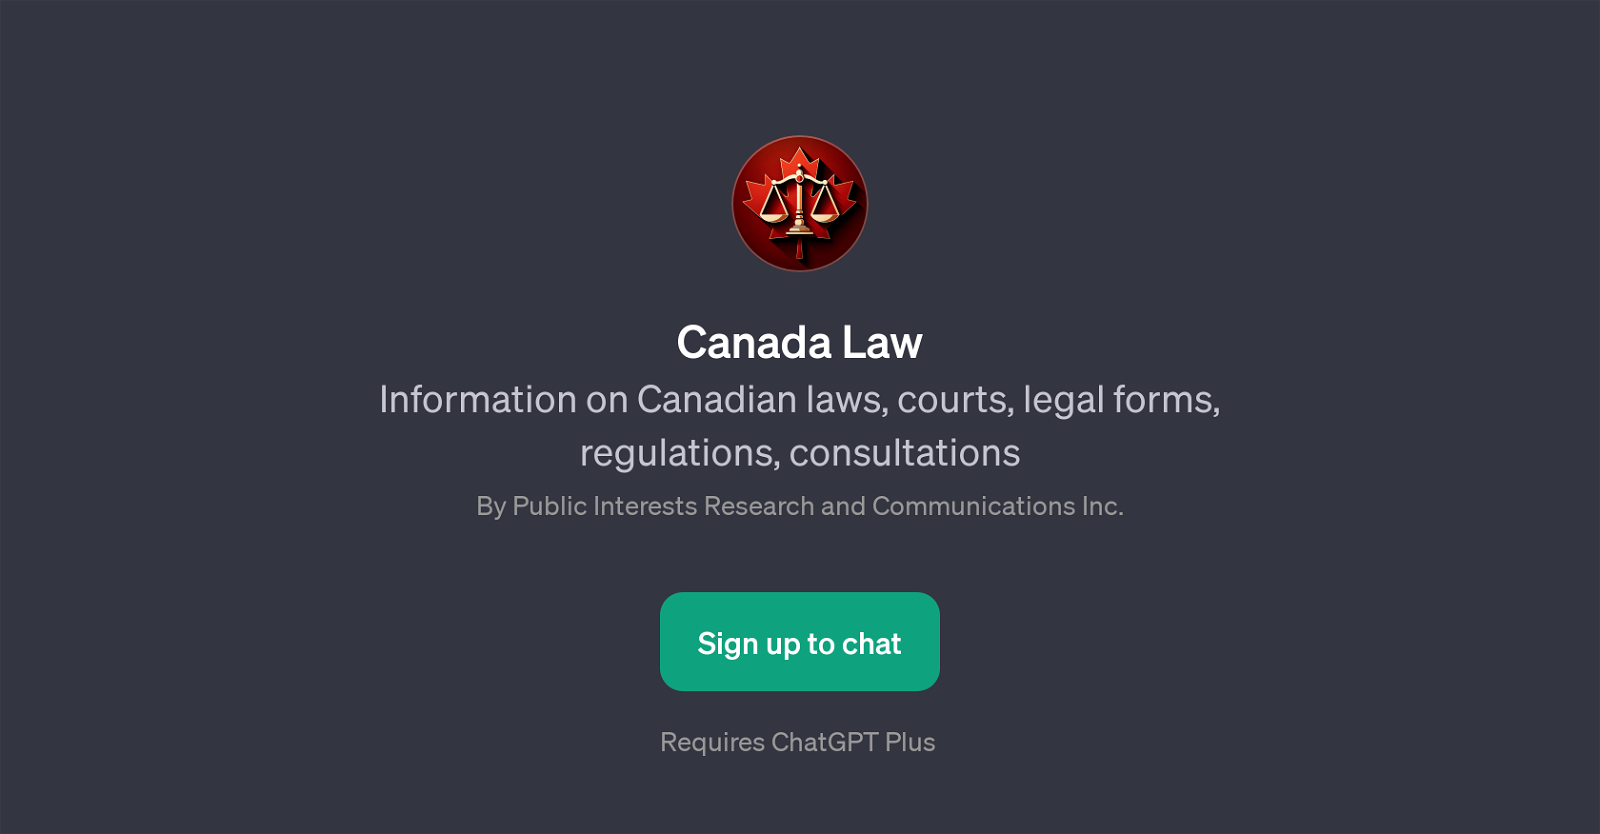 Canada Law website